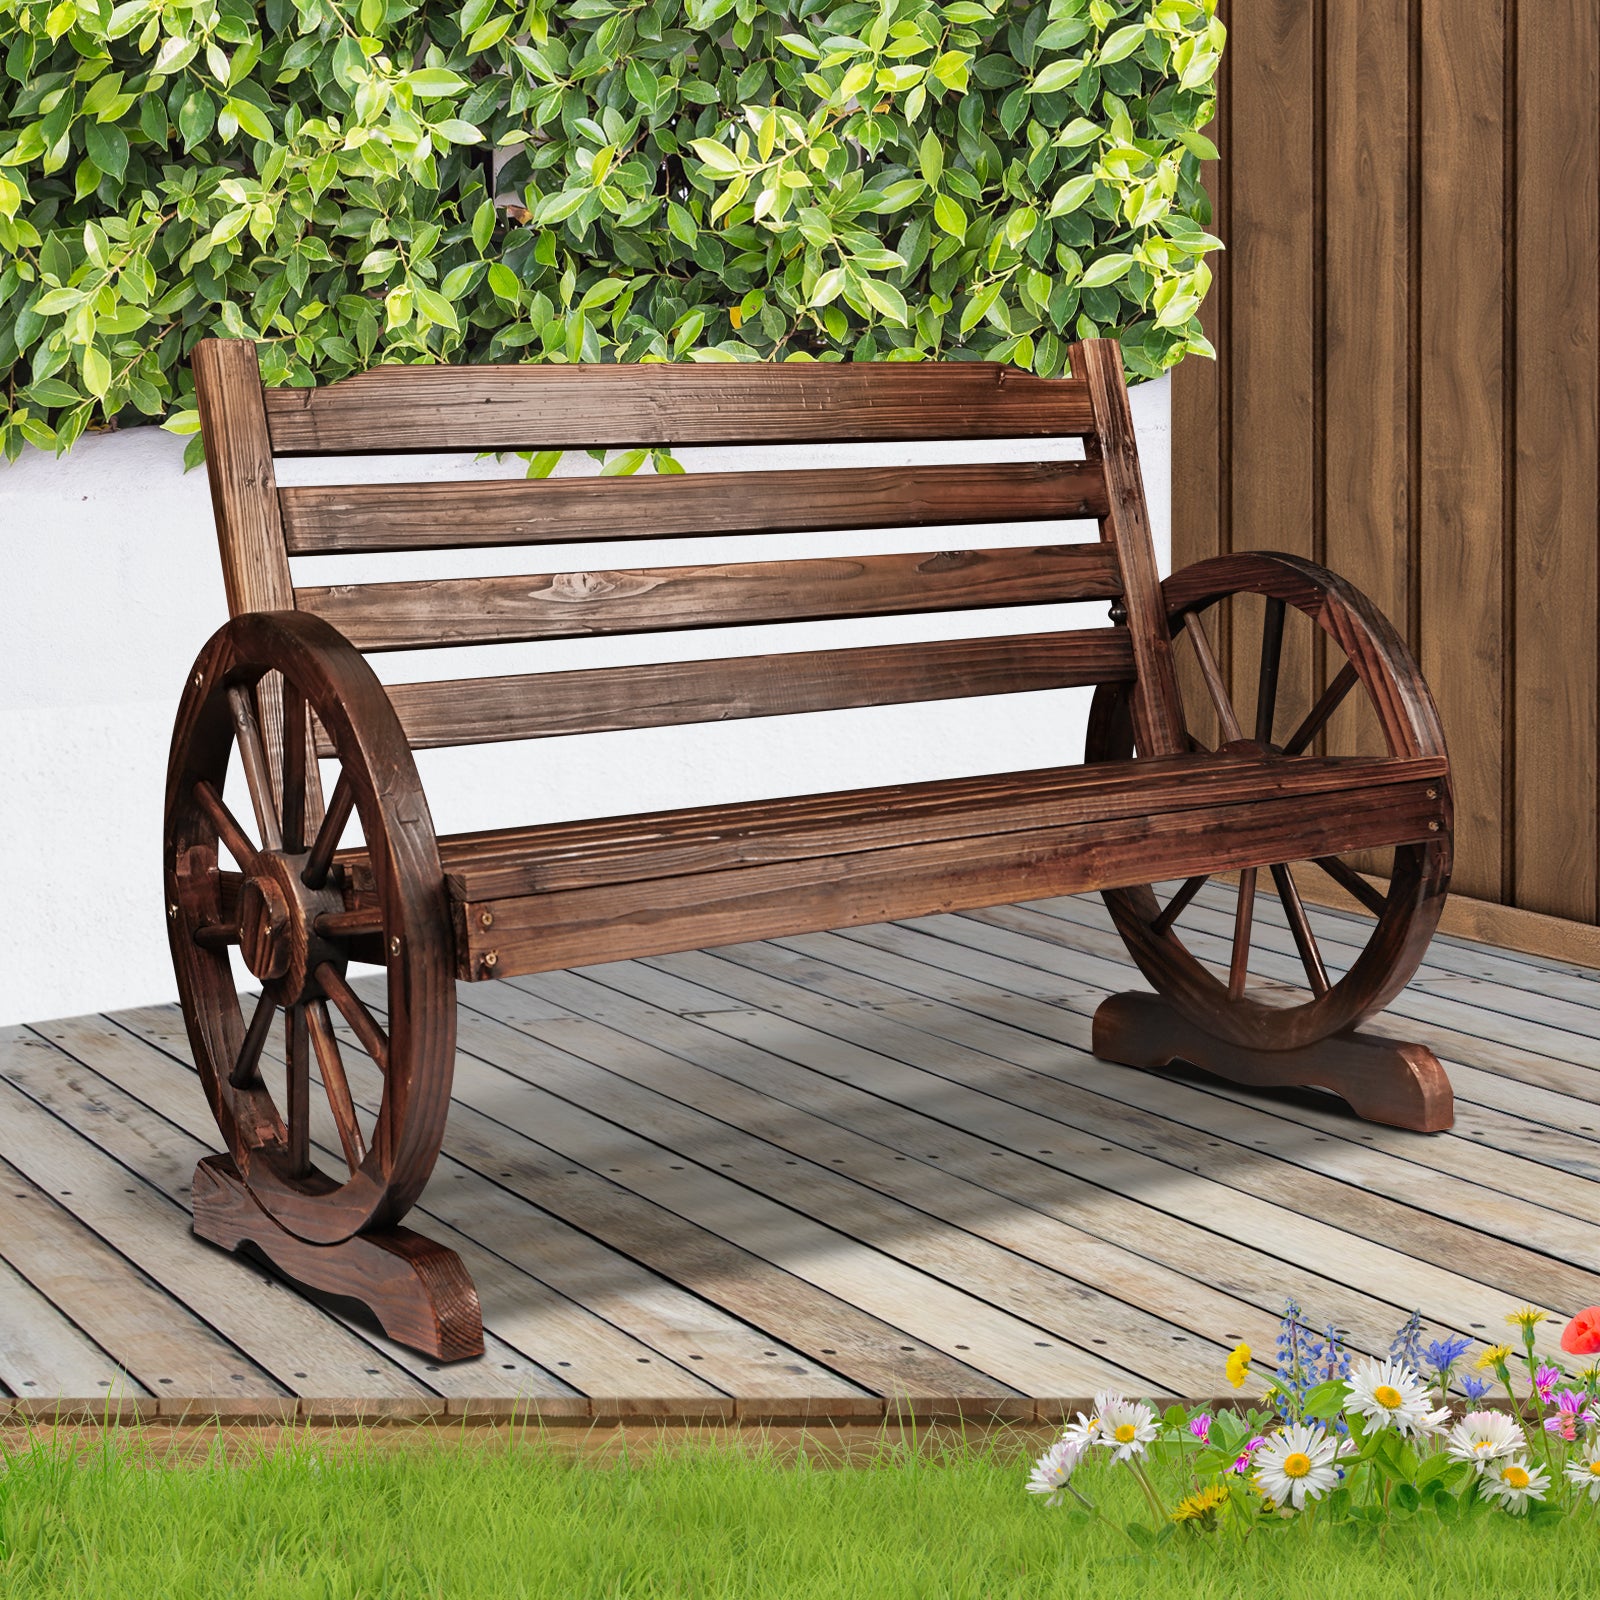 Livsip Wooden Garden Bench Wagon Chair Seat Outdoor Patio Furniture Lounge Wheel